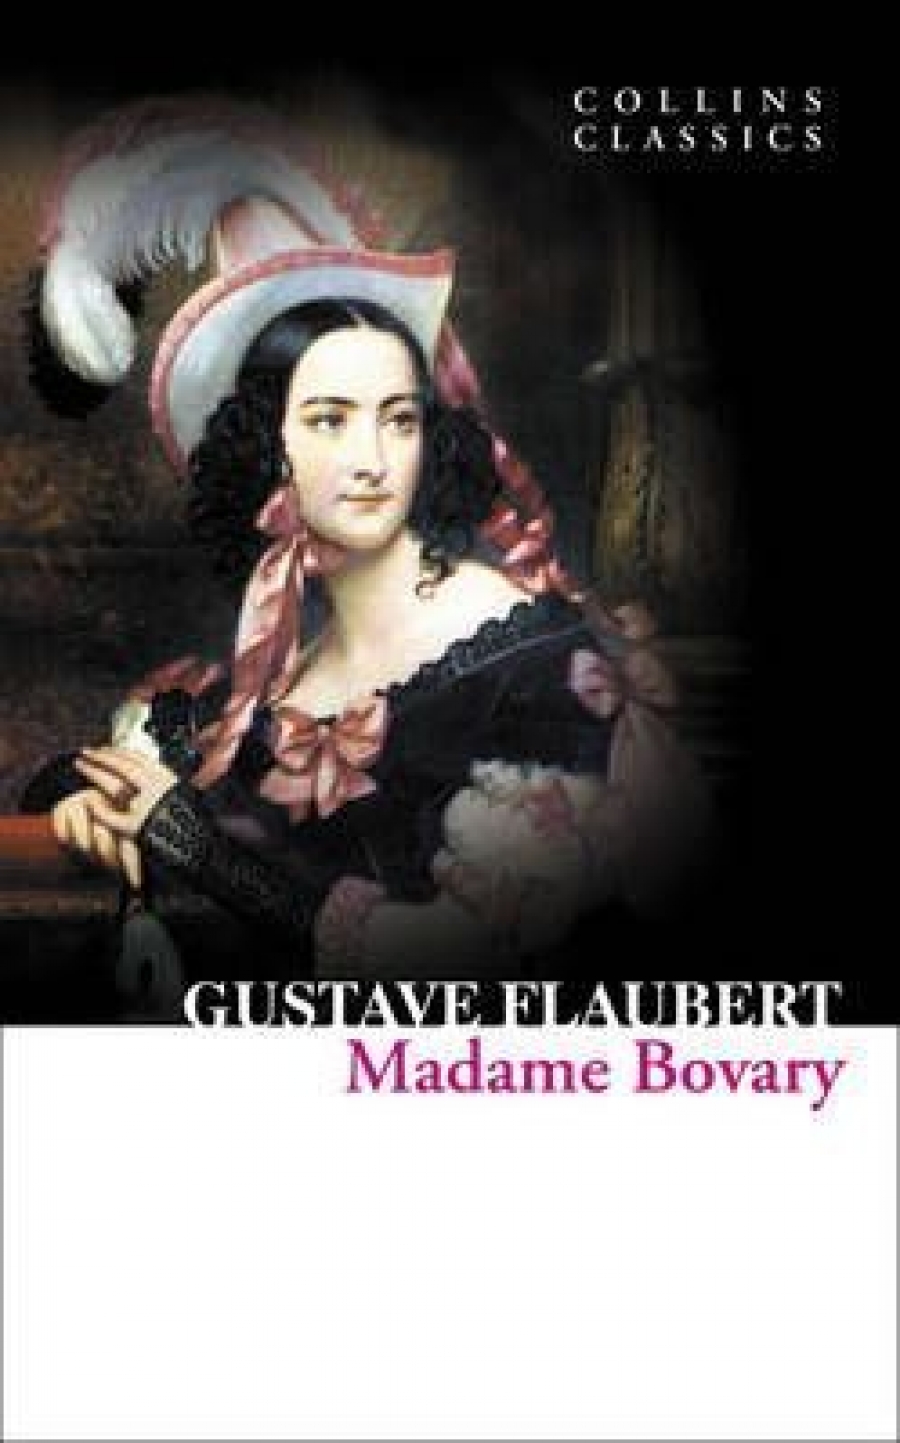 Gustave, Flaubert Madame Bovary 